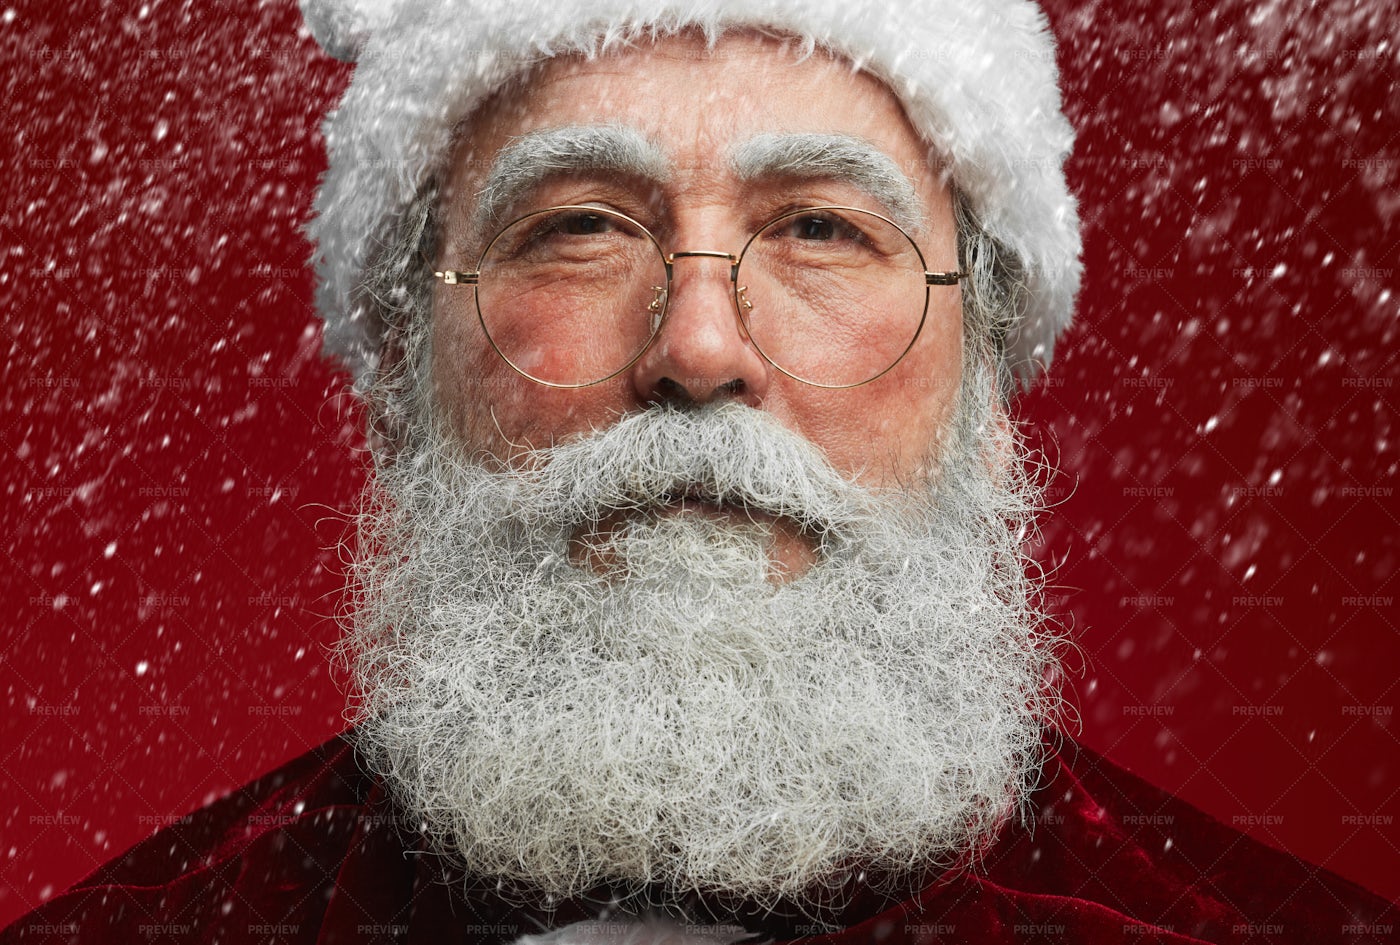 Classic Santa Claus With Snow: Stock Photos